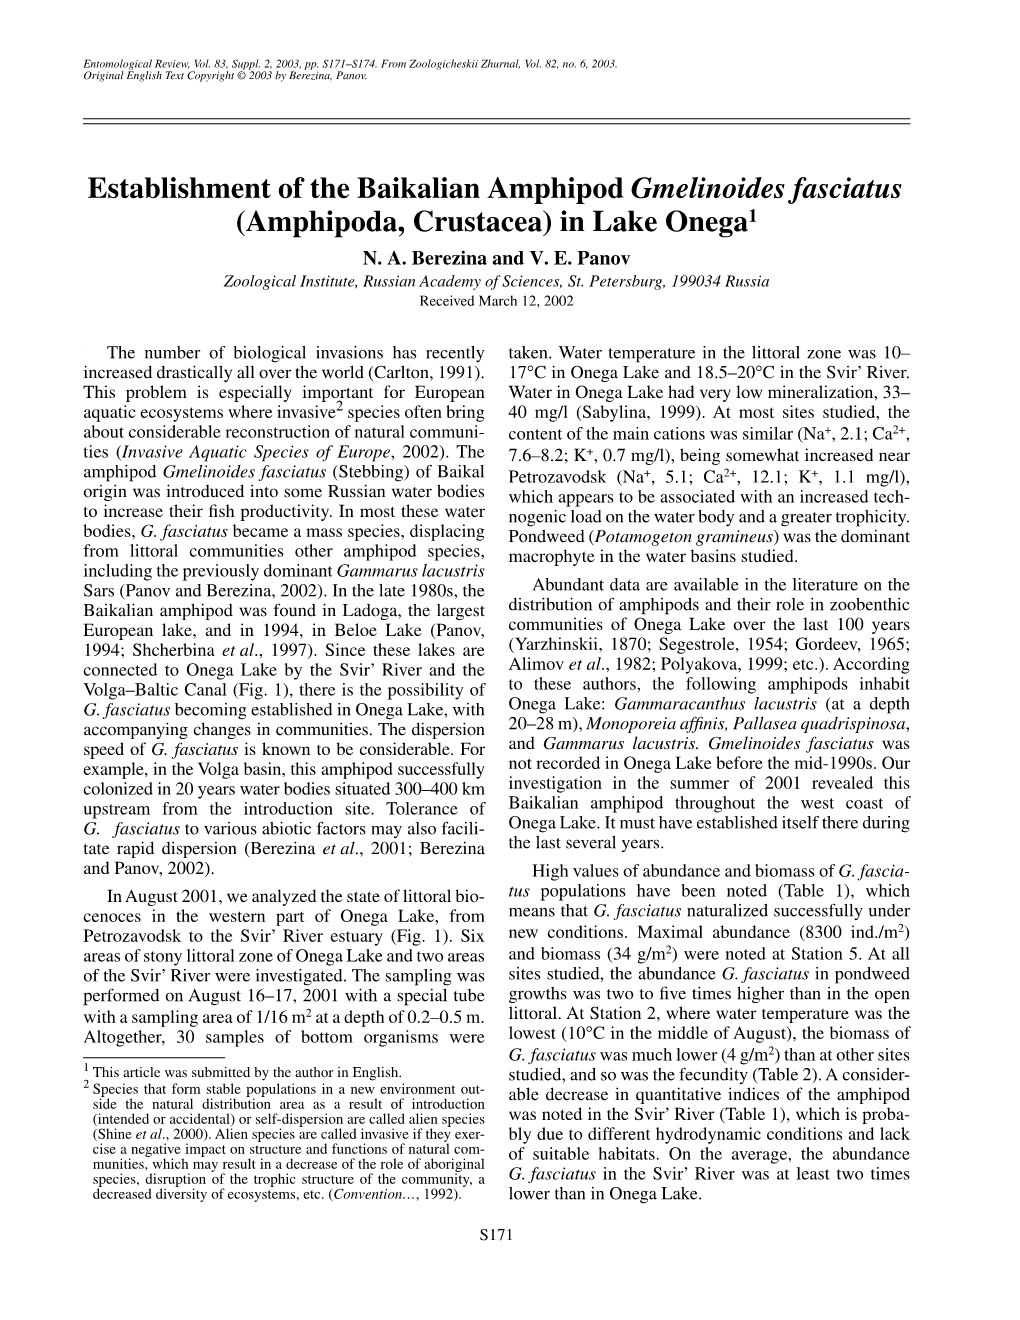 Establishment of the Baikalian Amphipod Gmelinoides Fasciatus (Amphipoda, Crustacea) in Lake Onega1 N